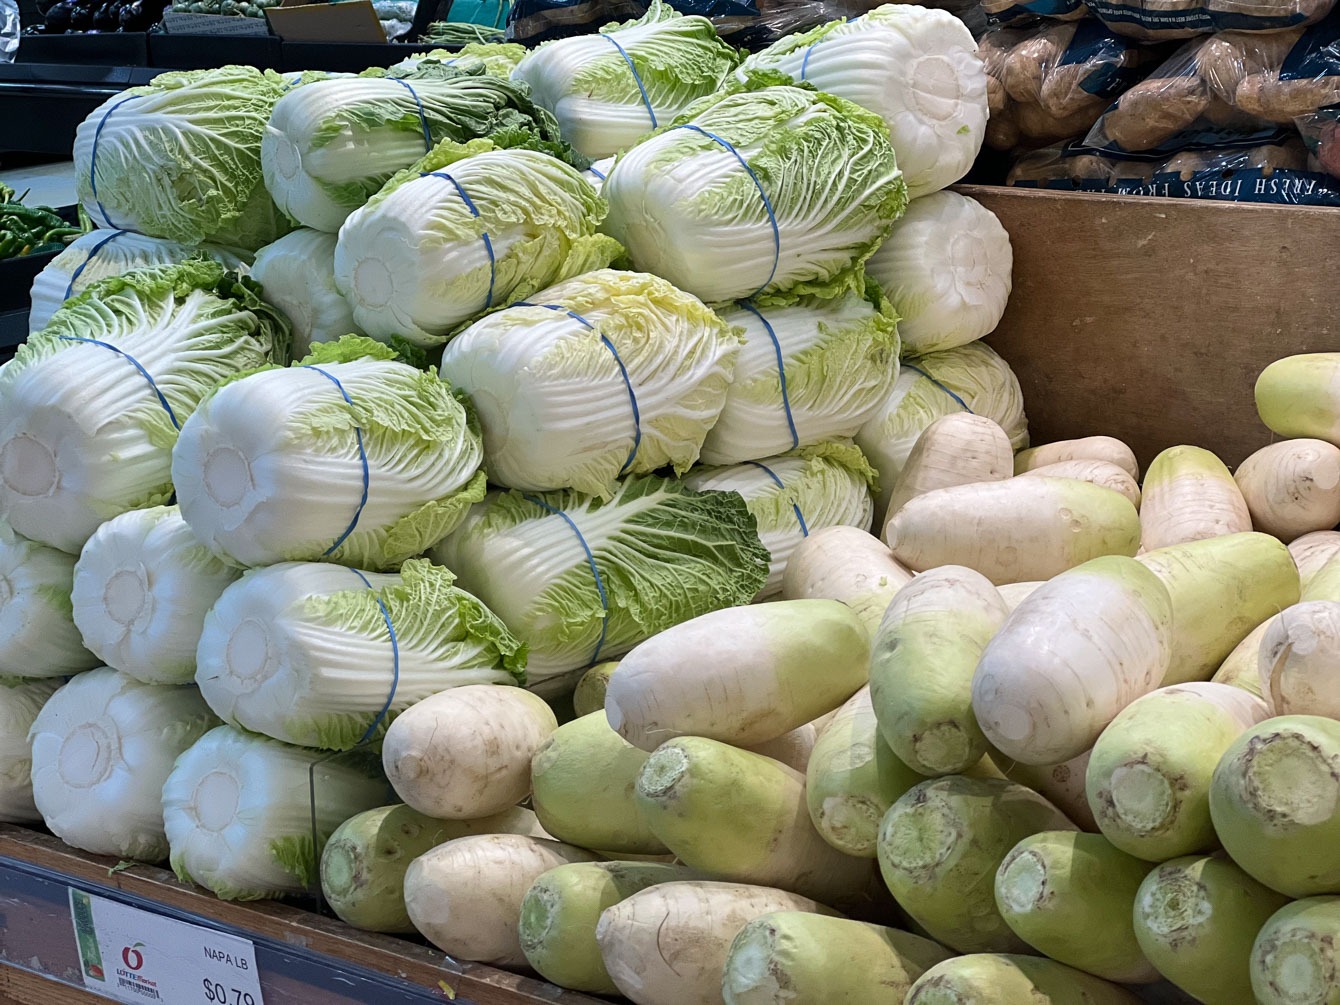 Napa cabbage and radish as Korean produce and vegetables.